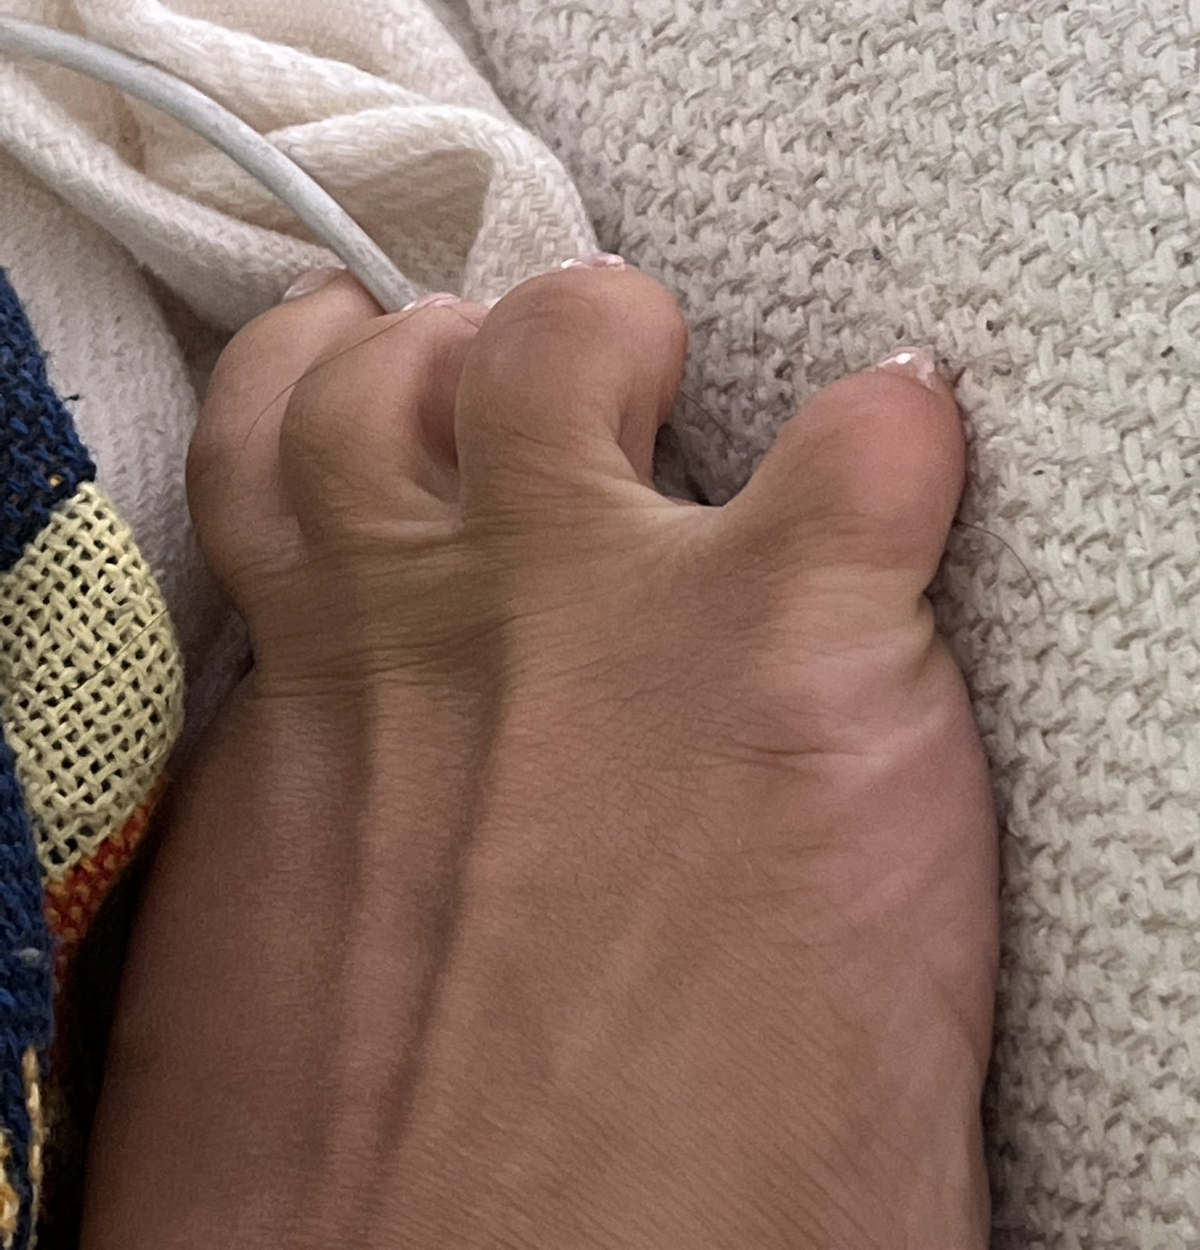 Doja Cat's foot